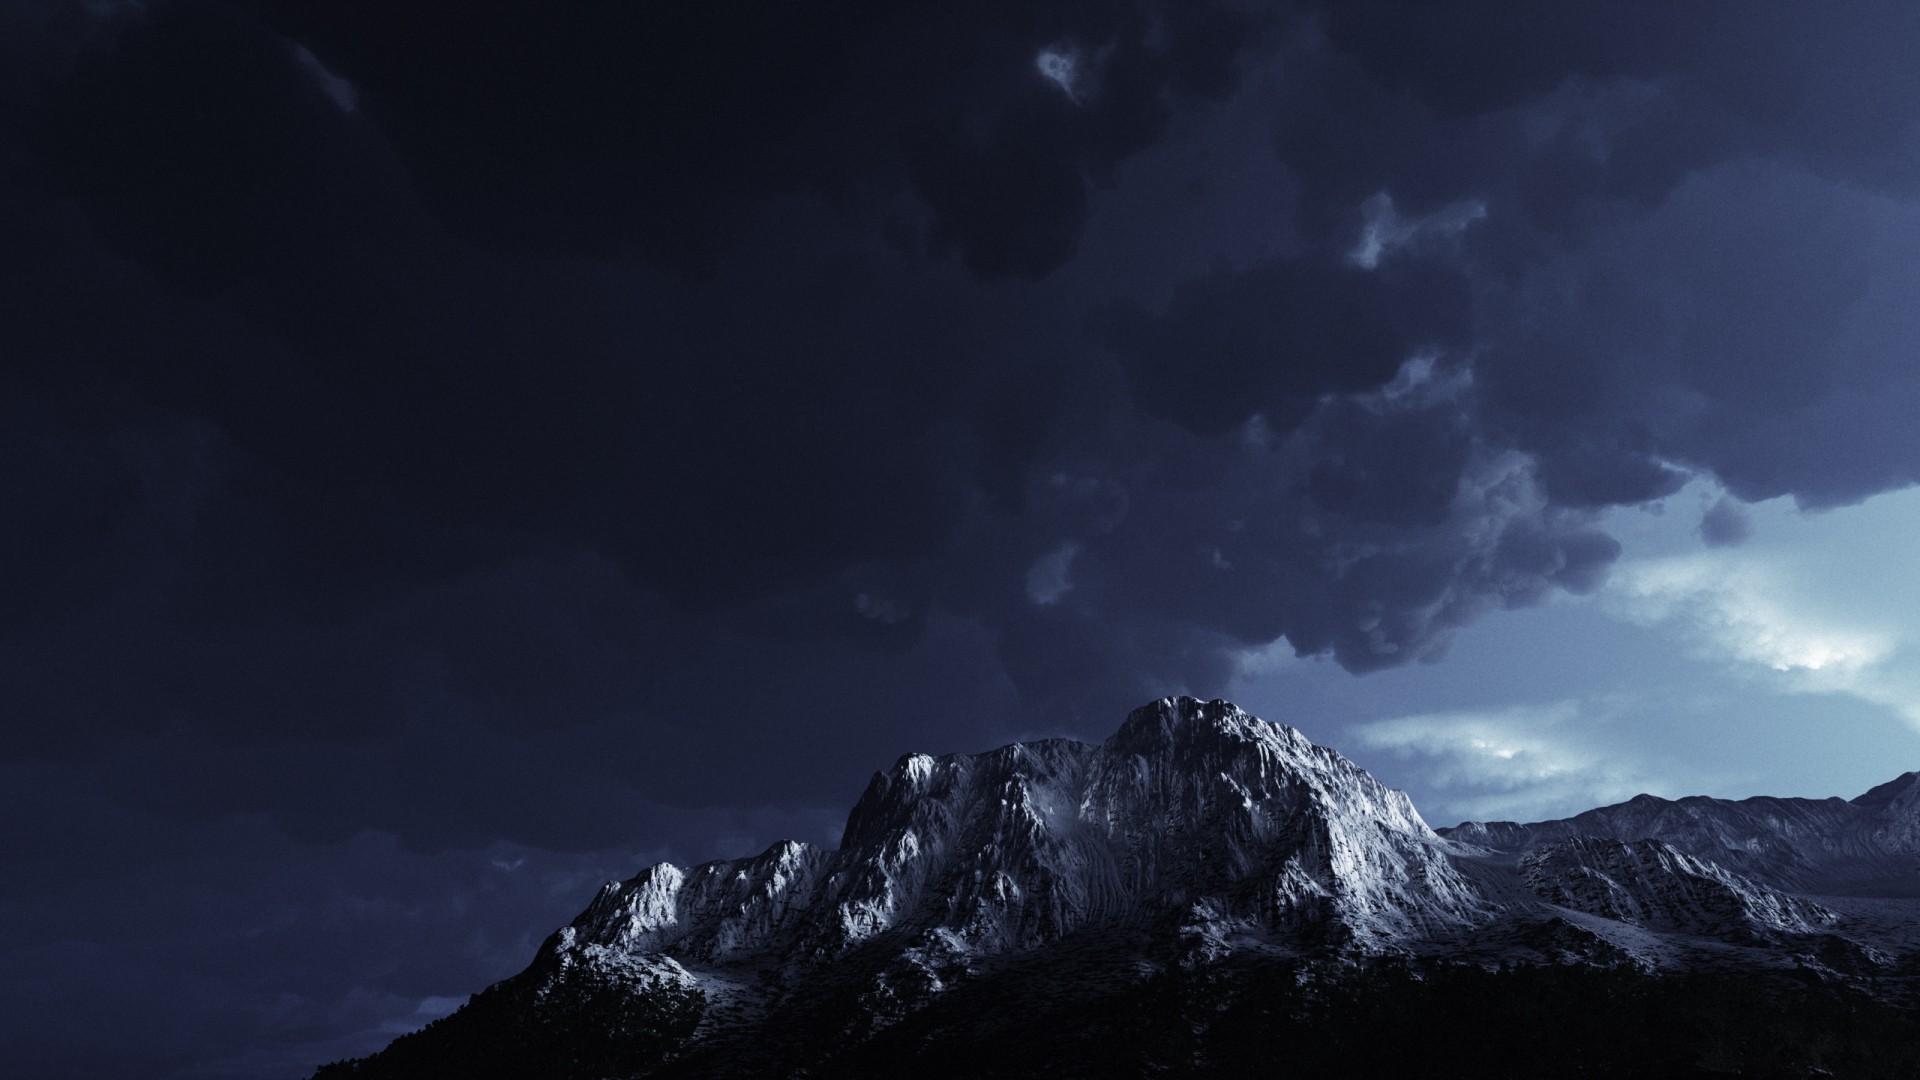 Dark Storm Mountain Hd Desktop Wallpaper Images Picture